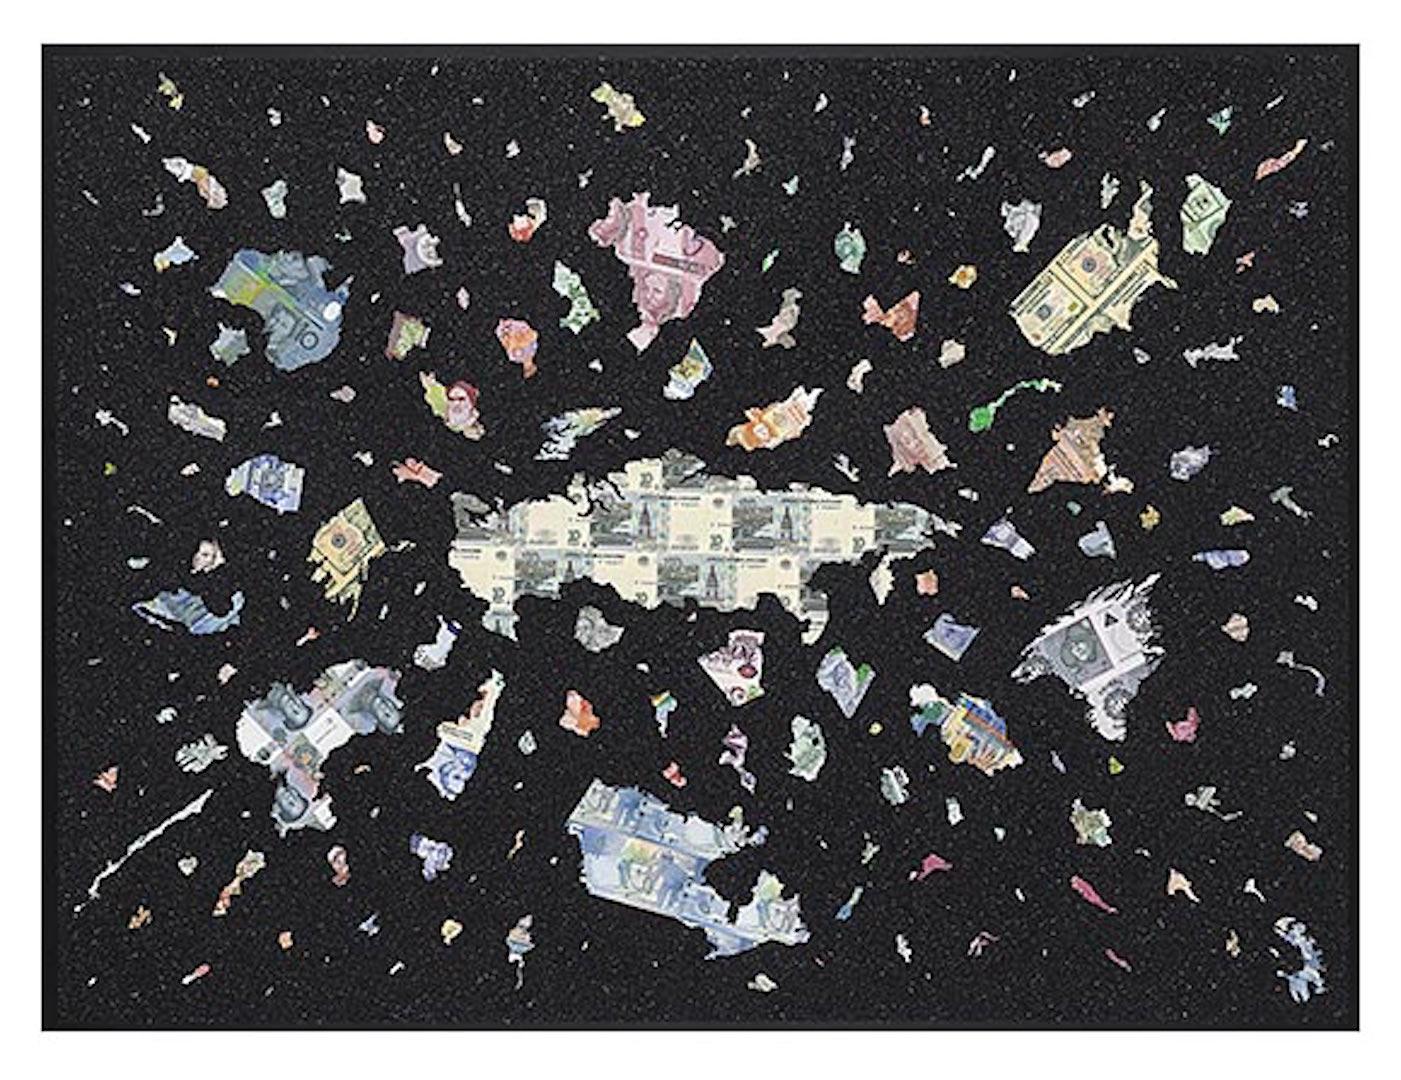 A Bigger Bang Black Diamond Dust, Contemporary Pop Art Astrological Map Art